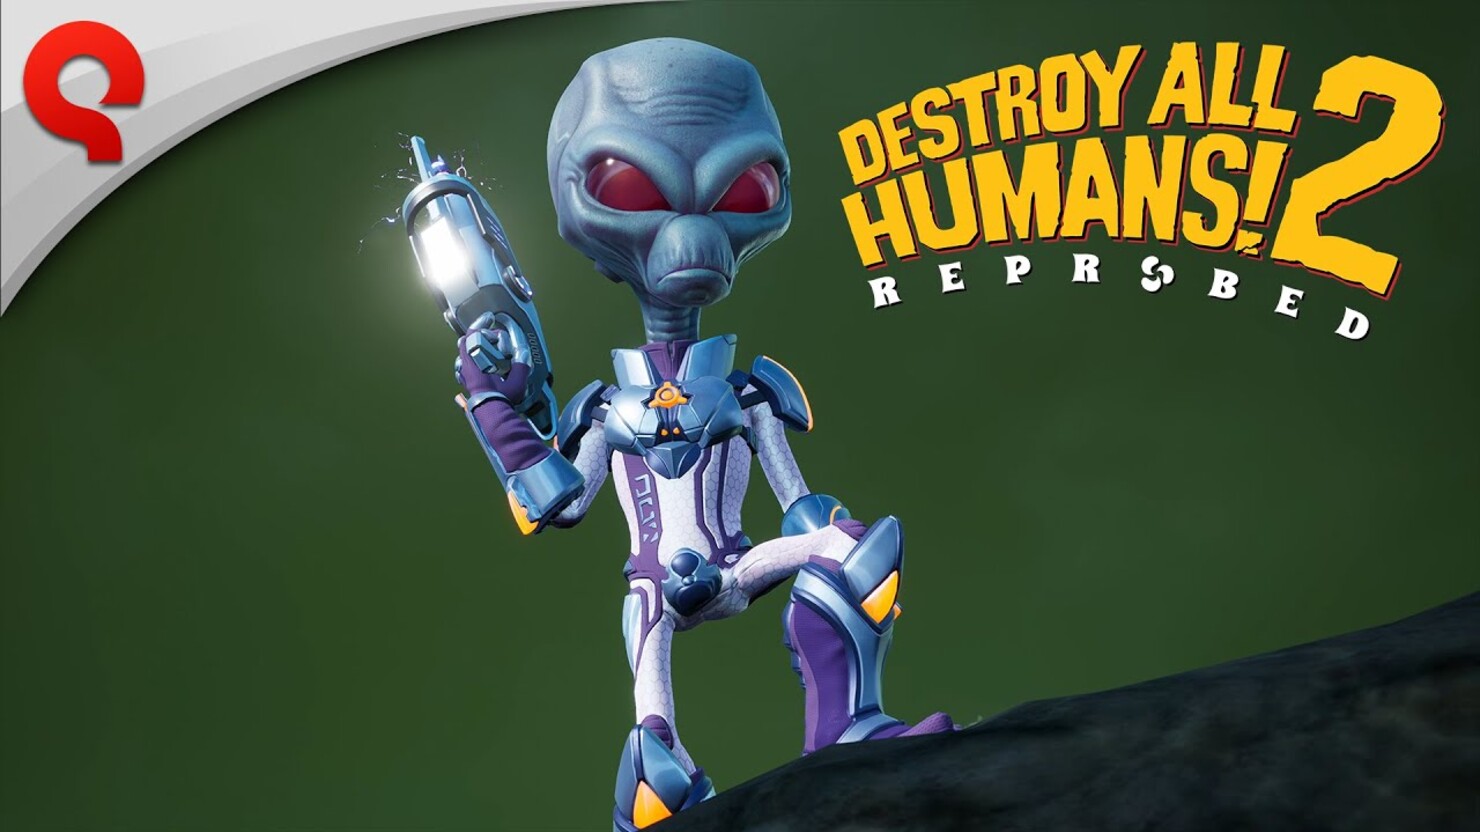 Destroy All Humans 2 — Reprobed — все трейлеры игры КГ Портал